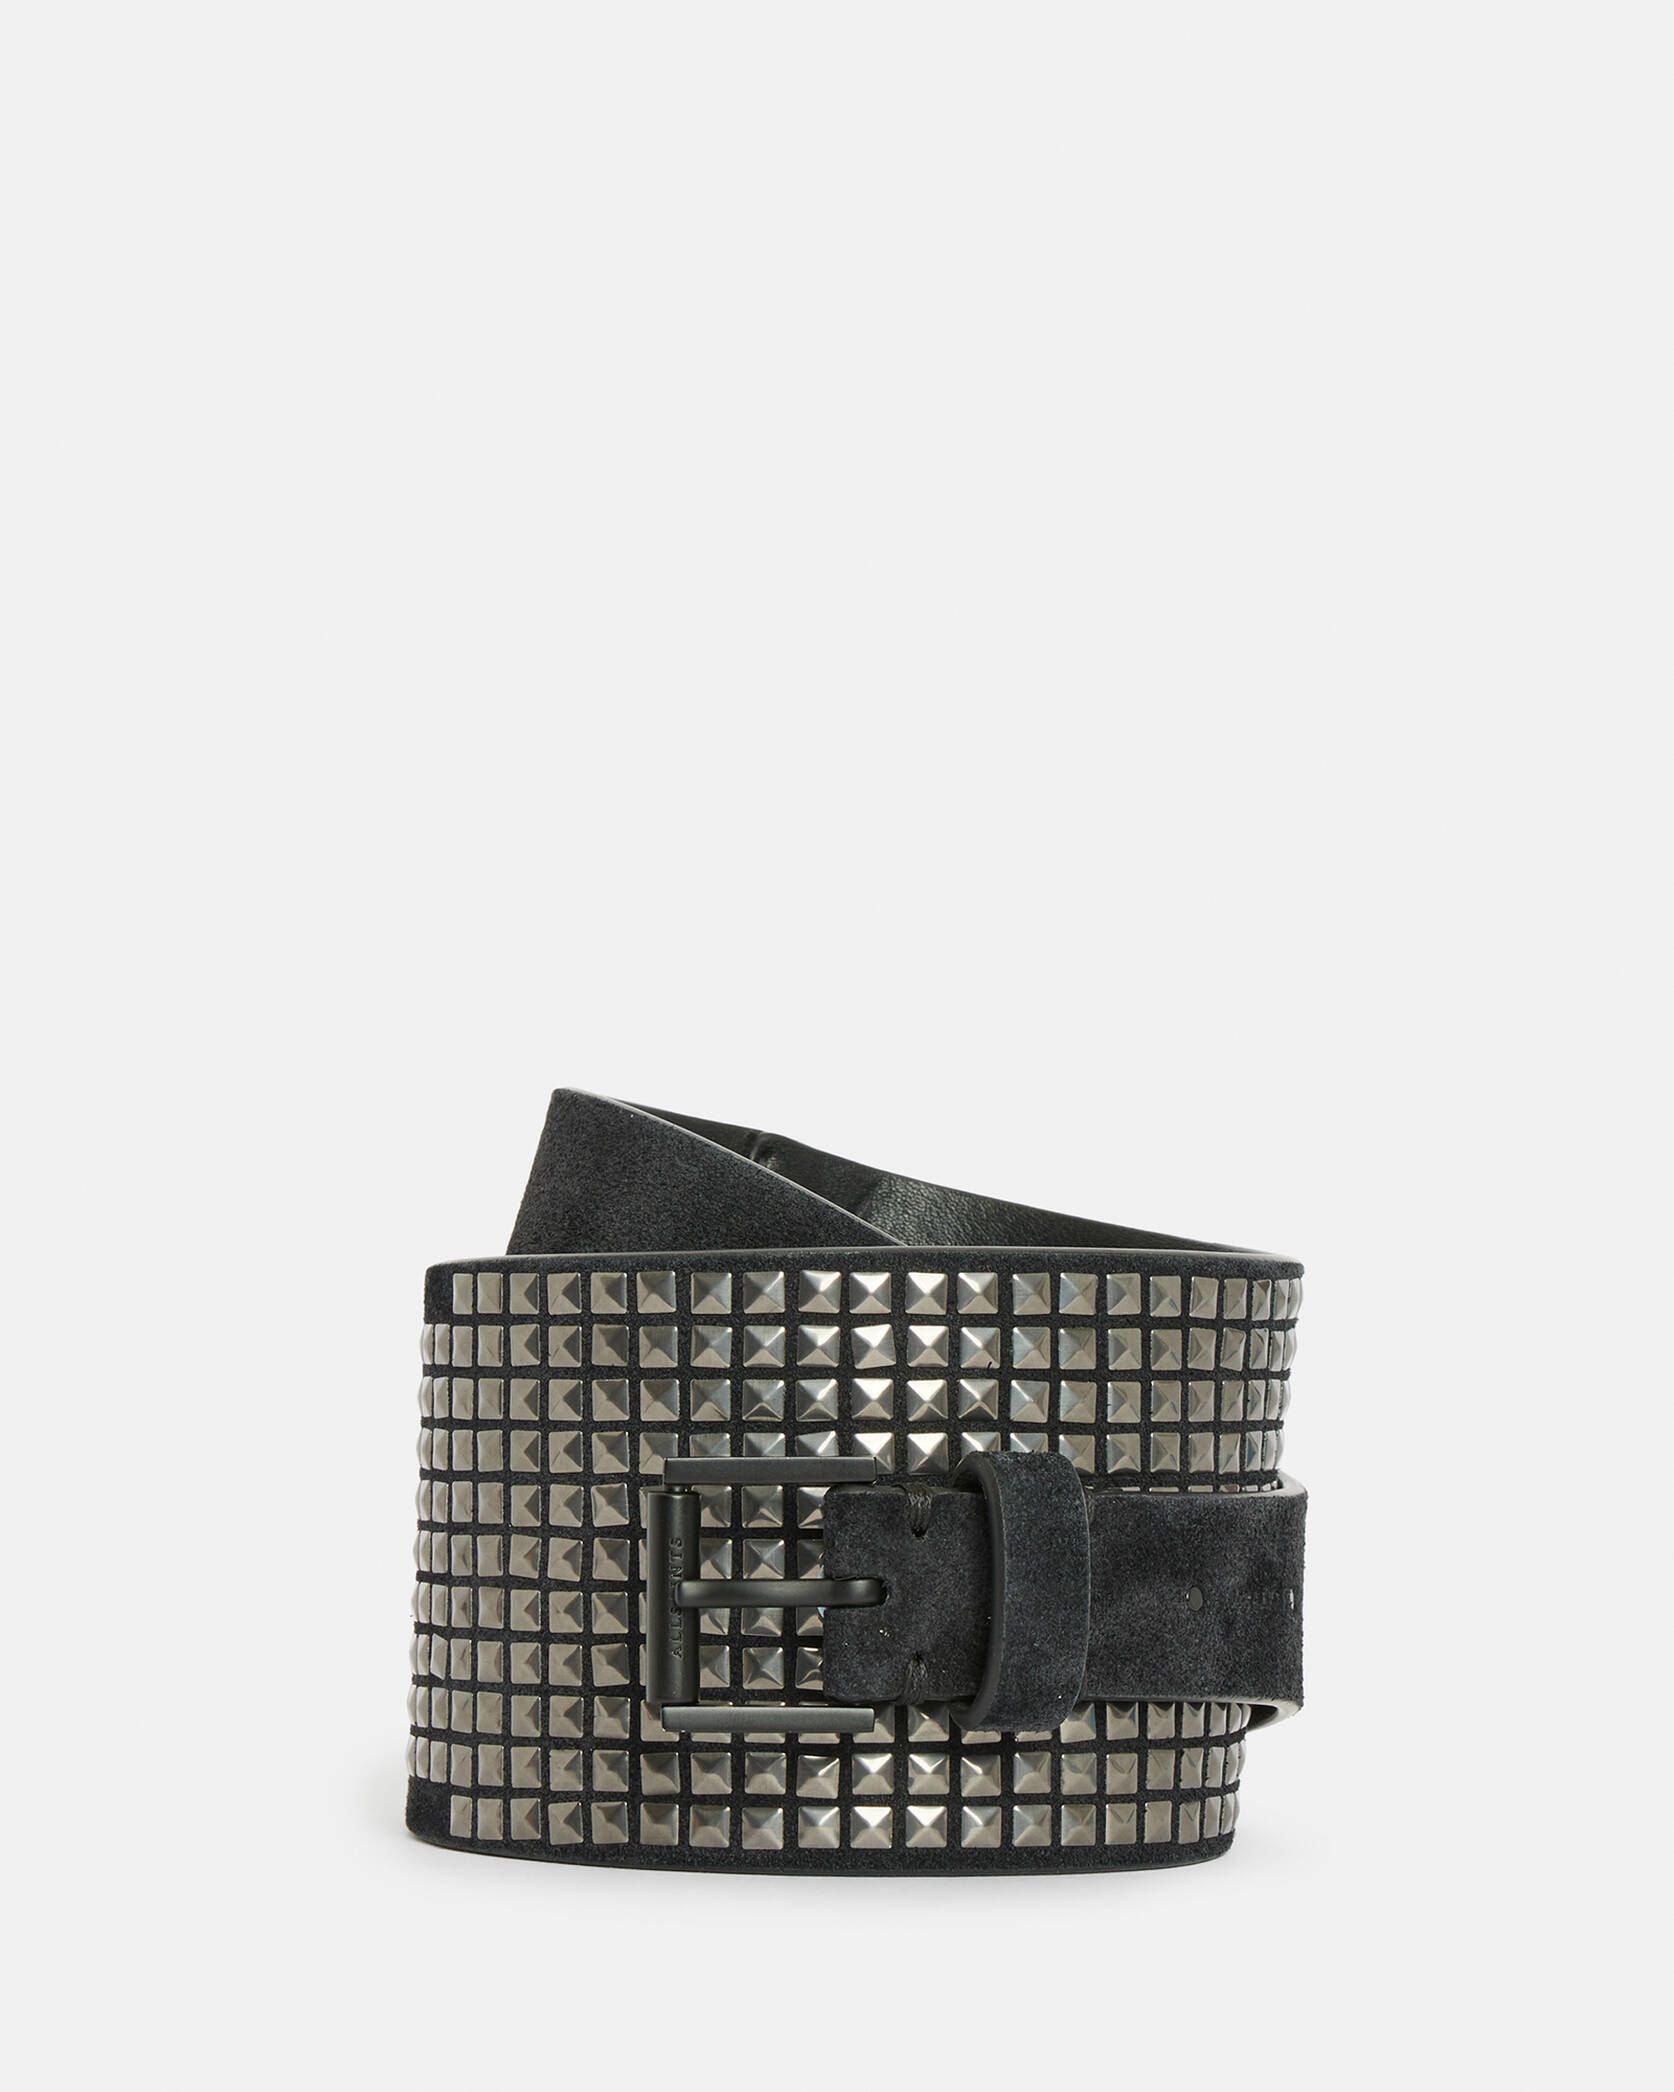 Simi Leather Studded Wide Waist Belt BLACK/DULL NICKEL | ALLSAINTS | AllSaints UK